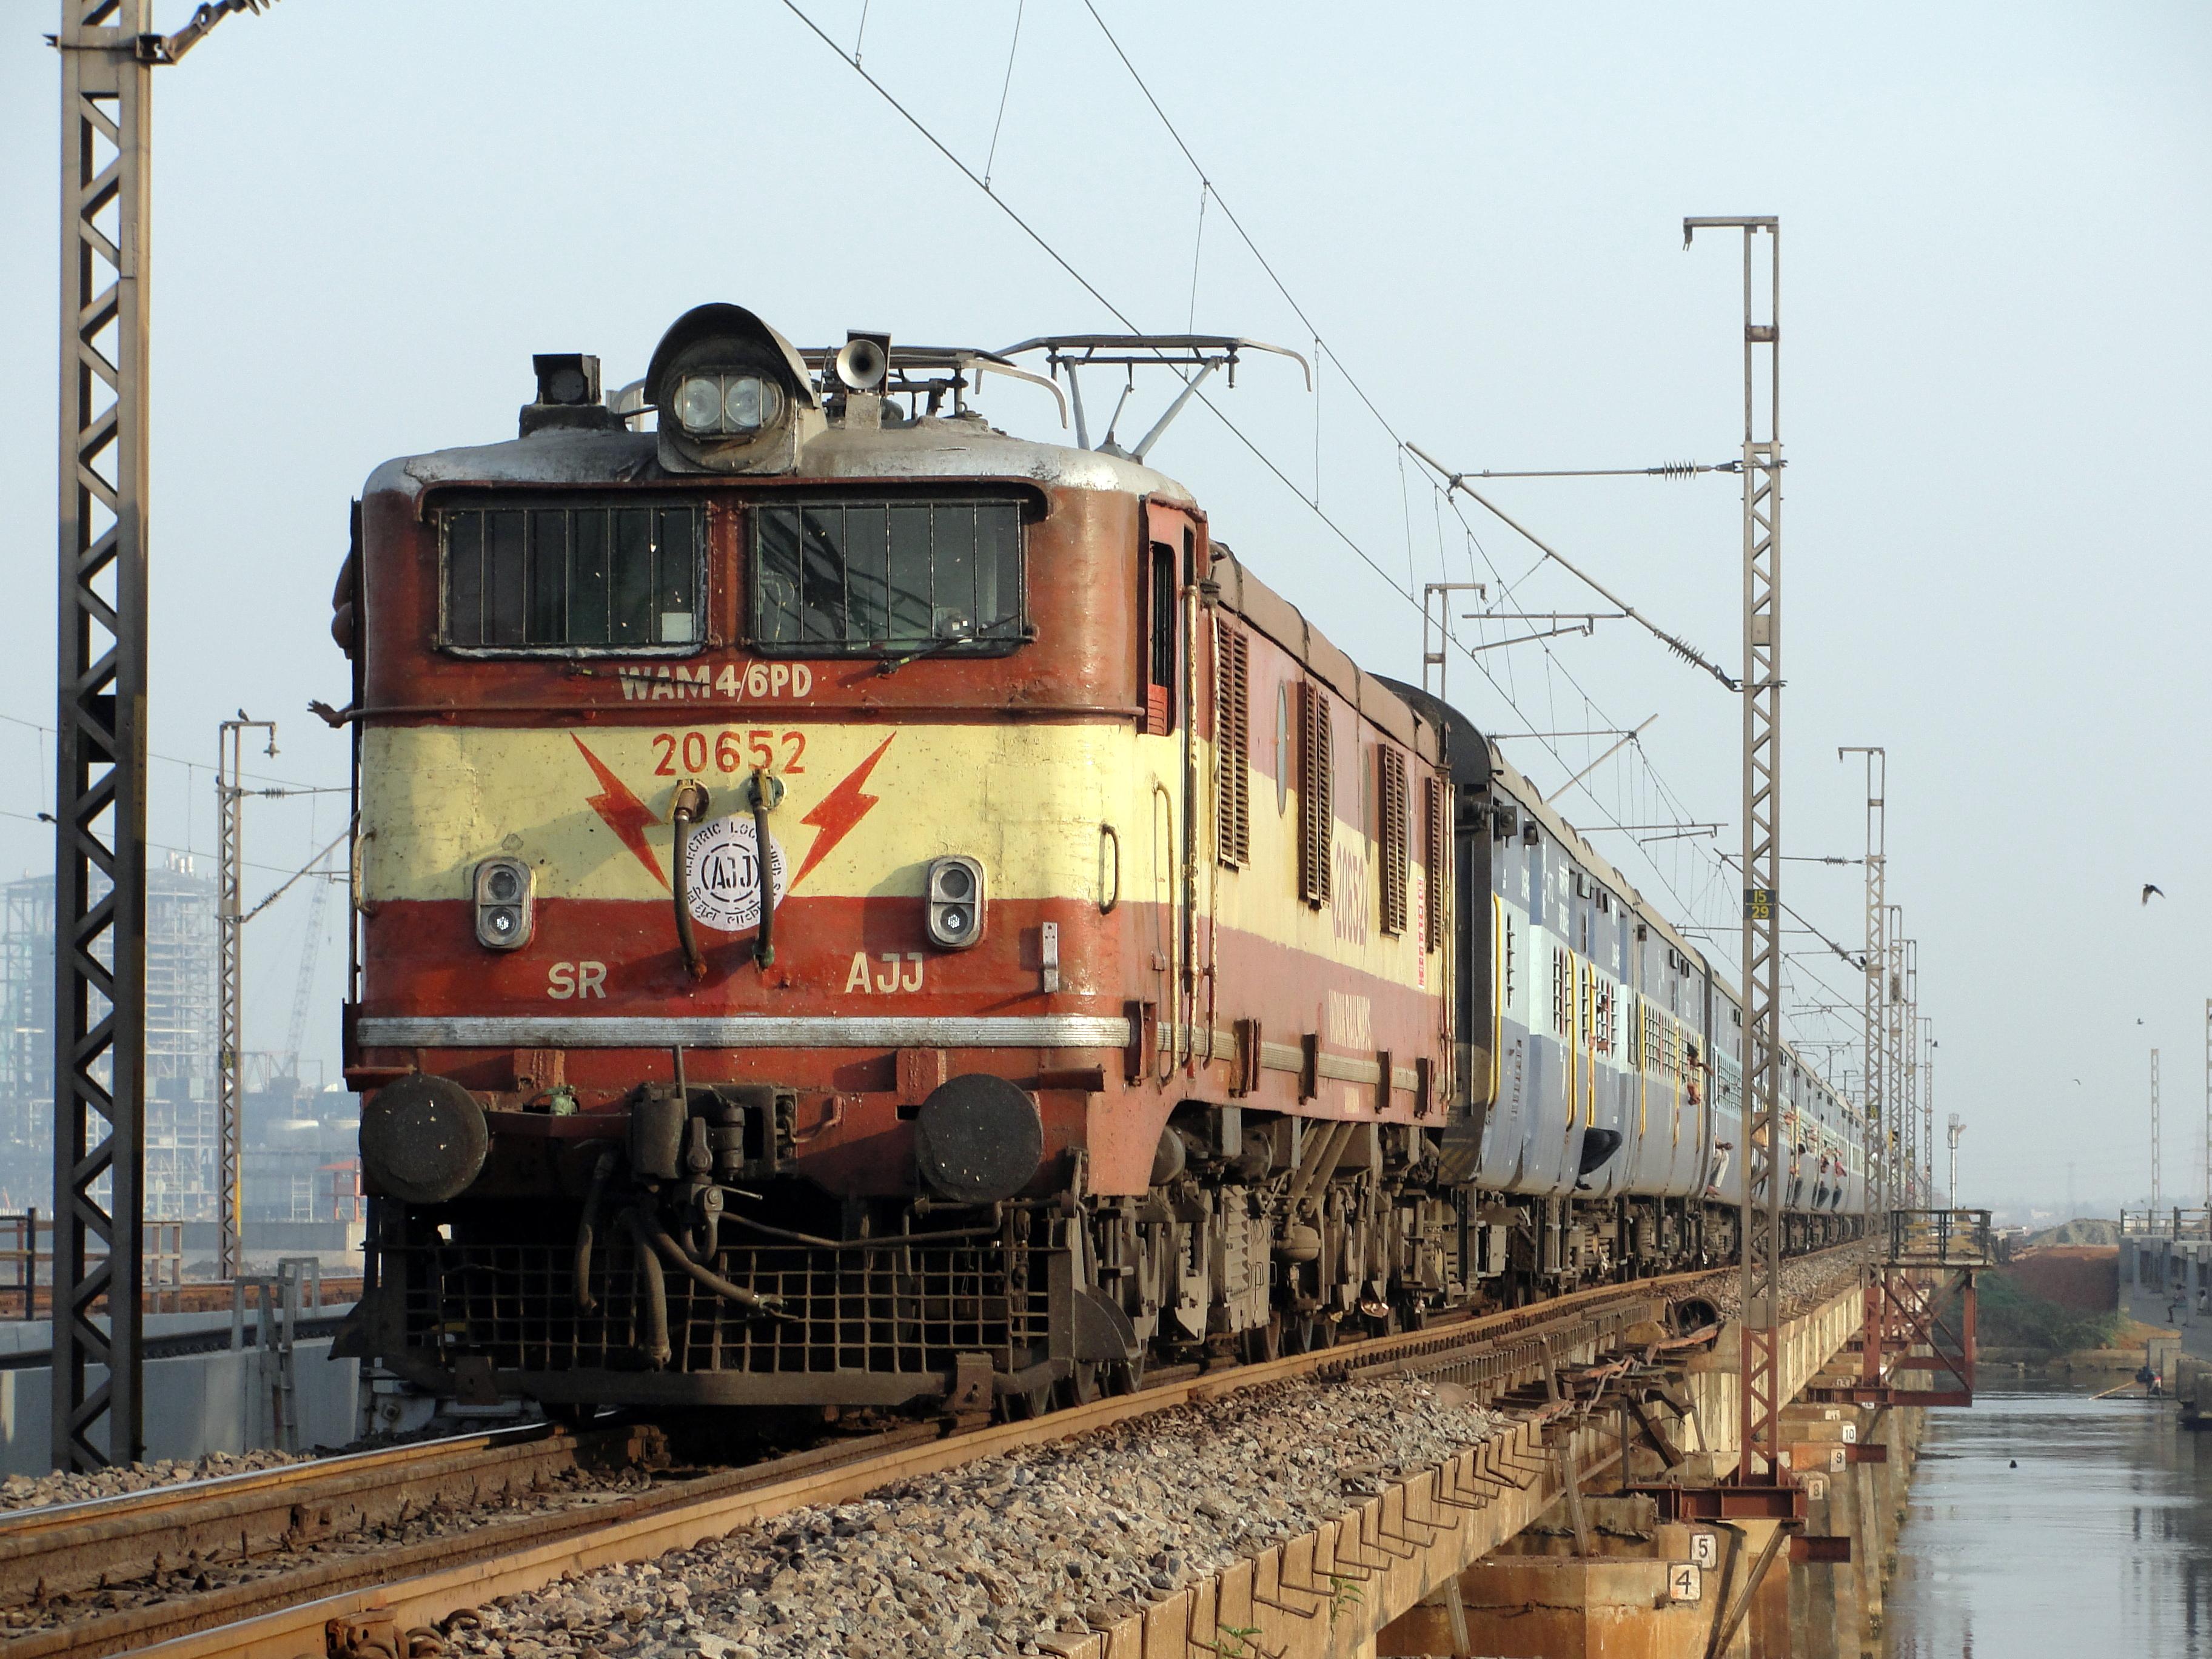 Indian Locomotive Class WAM 4